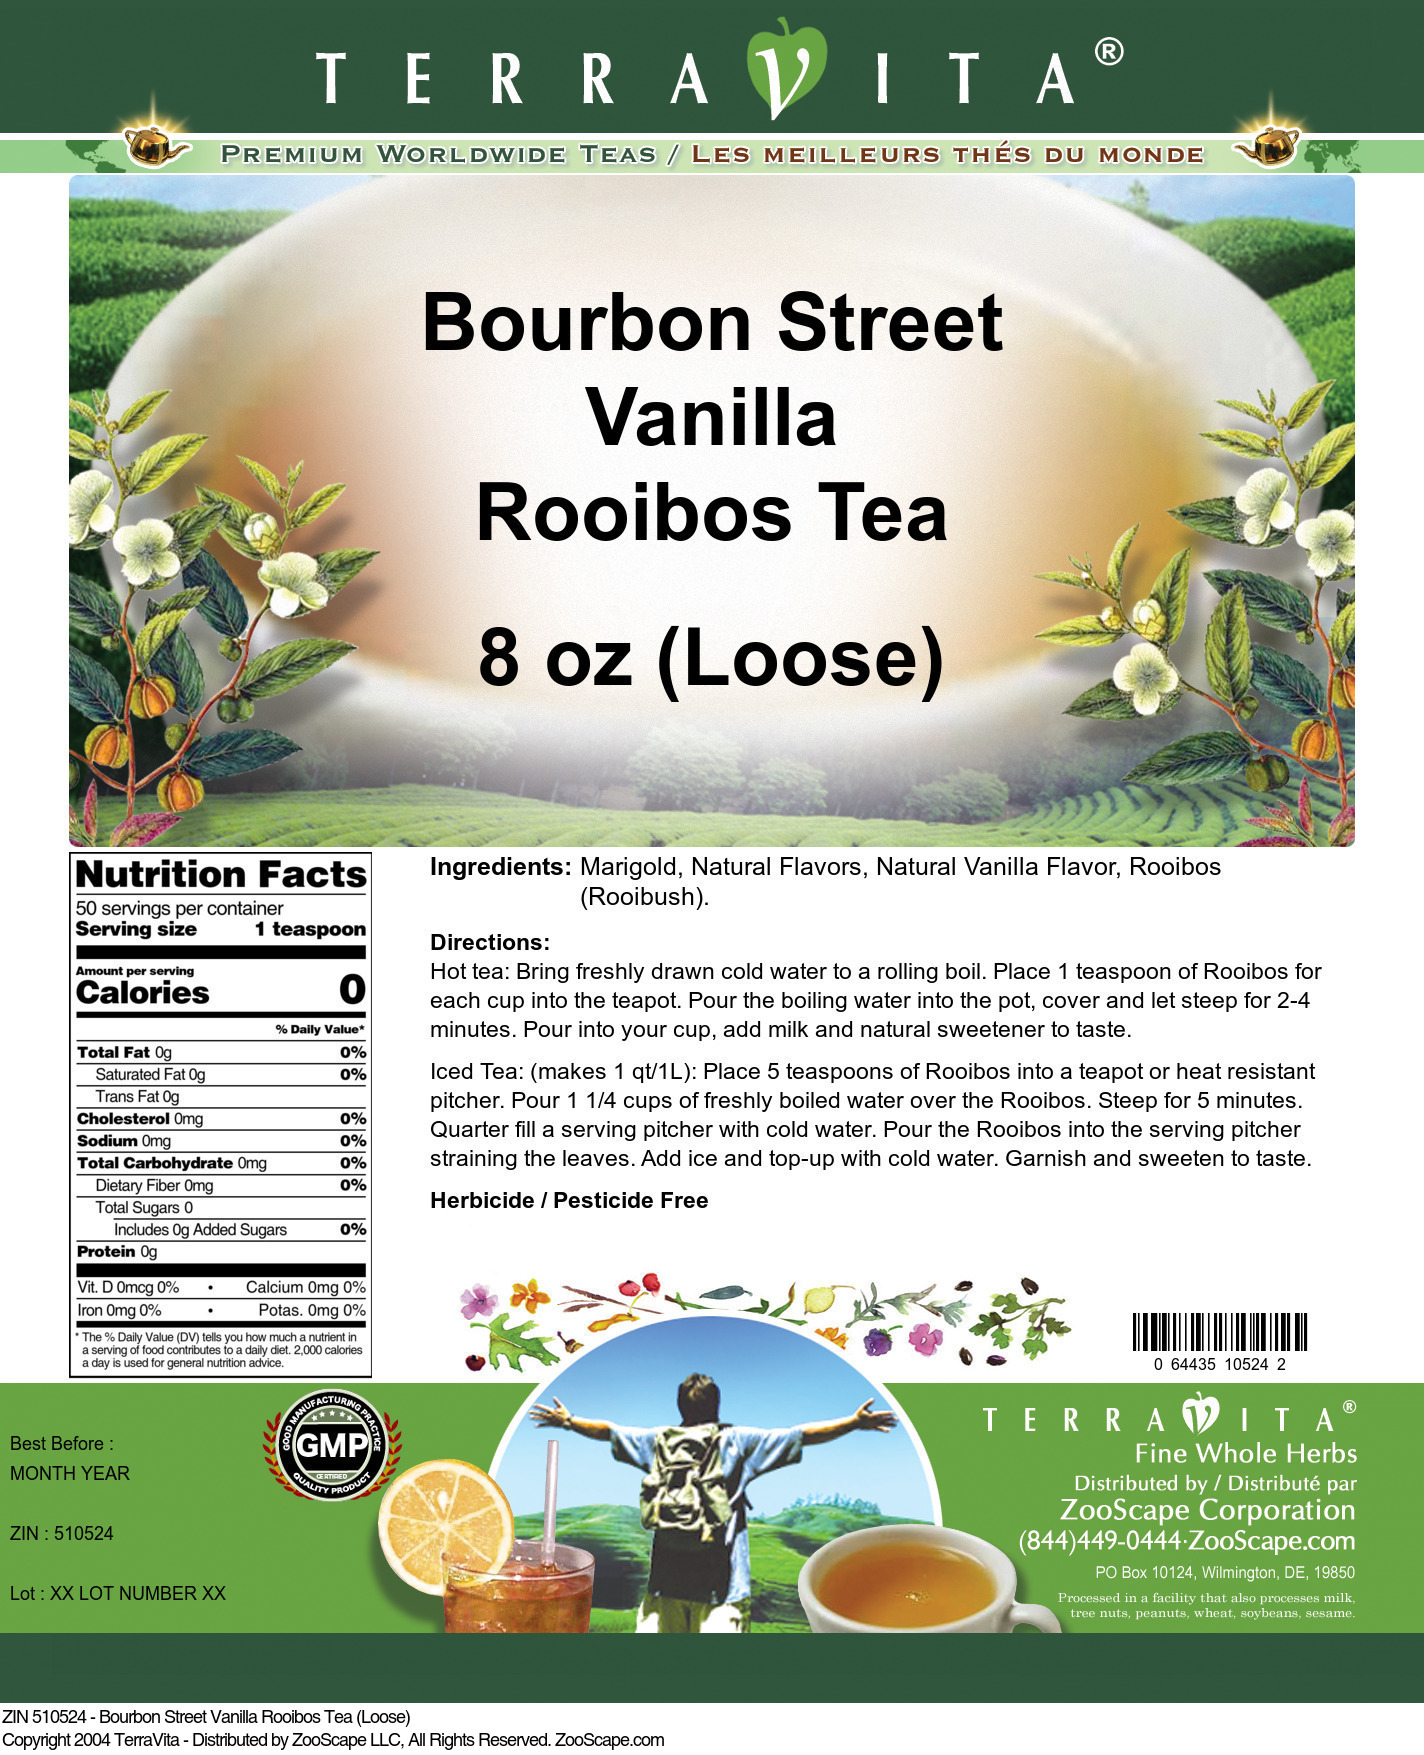 Bourbon Street Vanilla Rooibos Tea (Loose) - Label